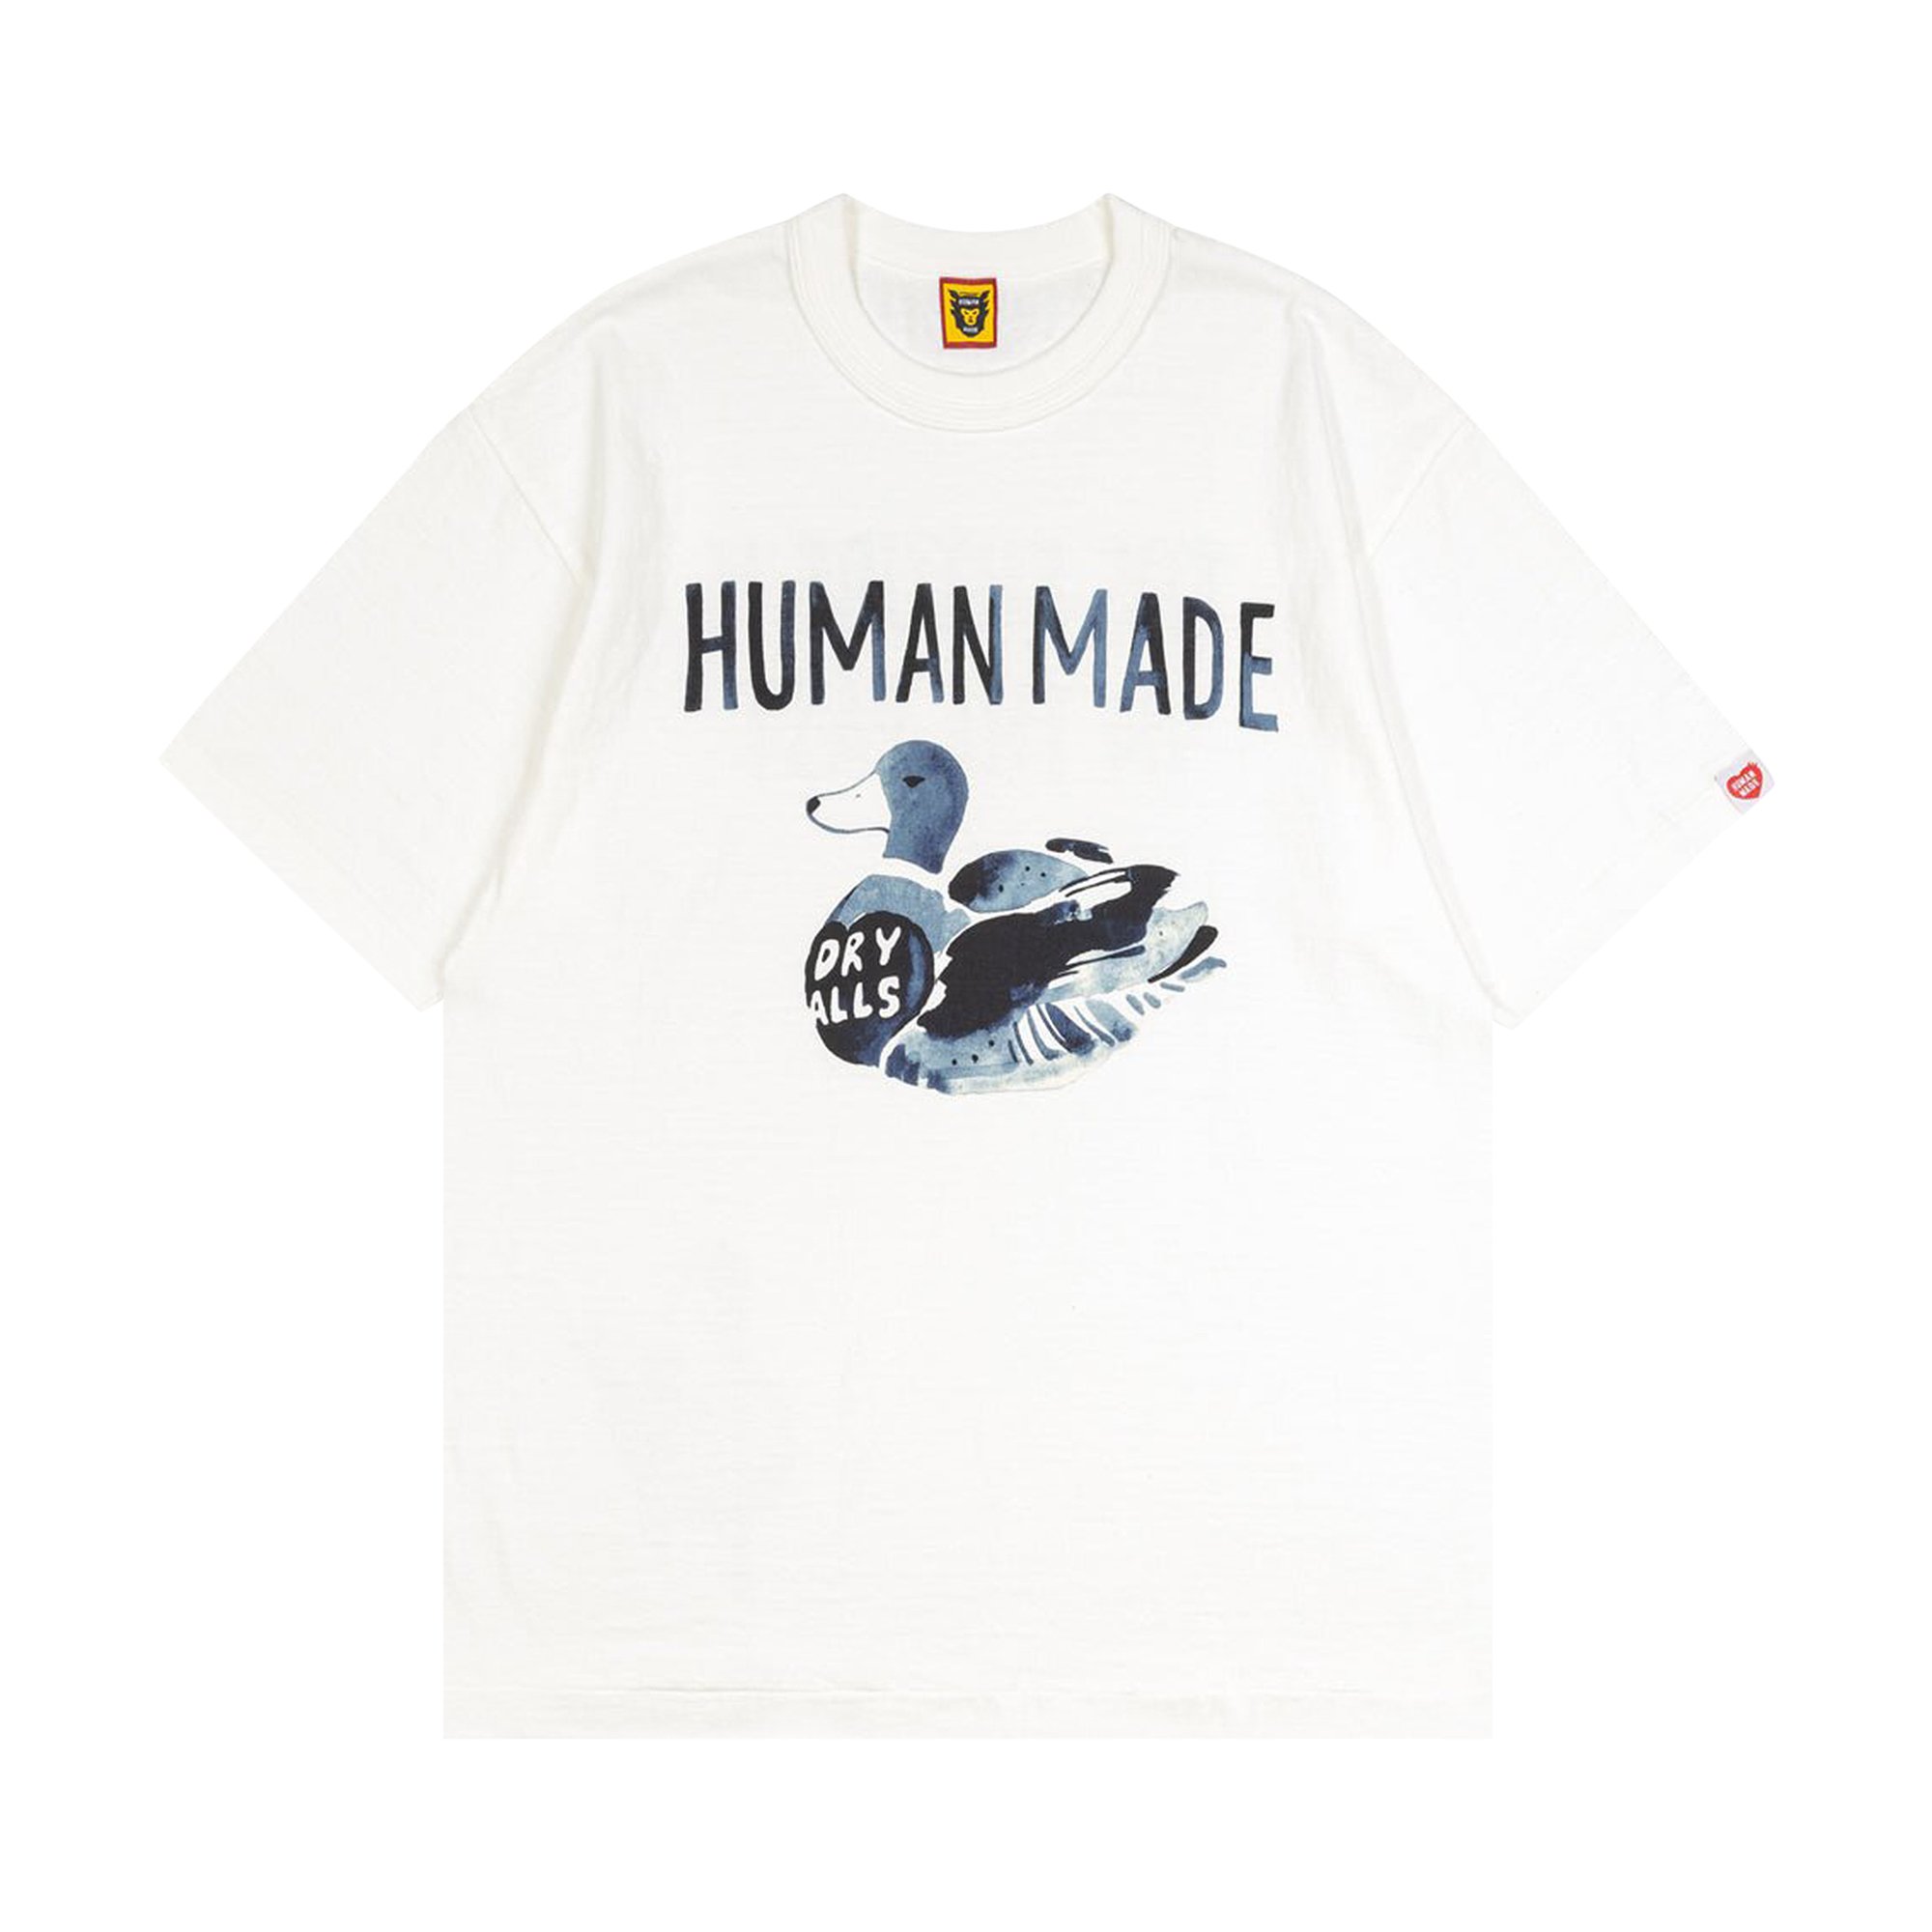 Buy Human Made Graphic T-Shirt 'White' - HM25TE022 WHIT | GOAT